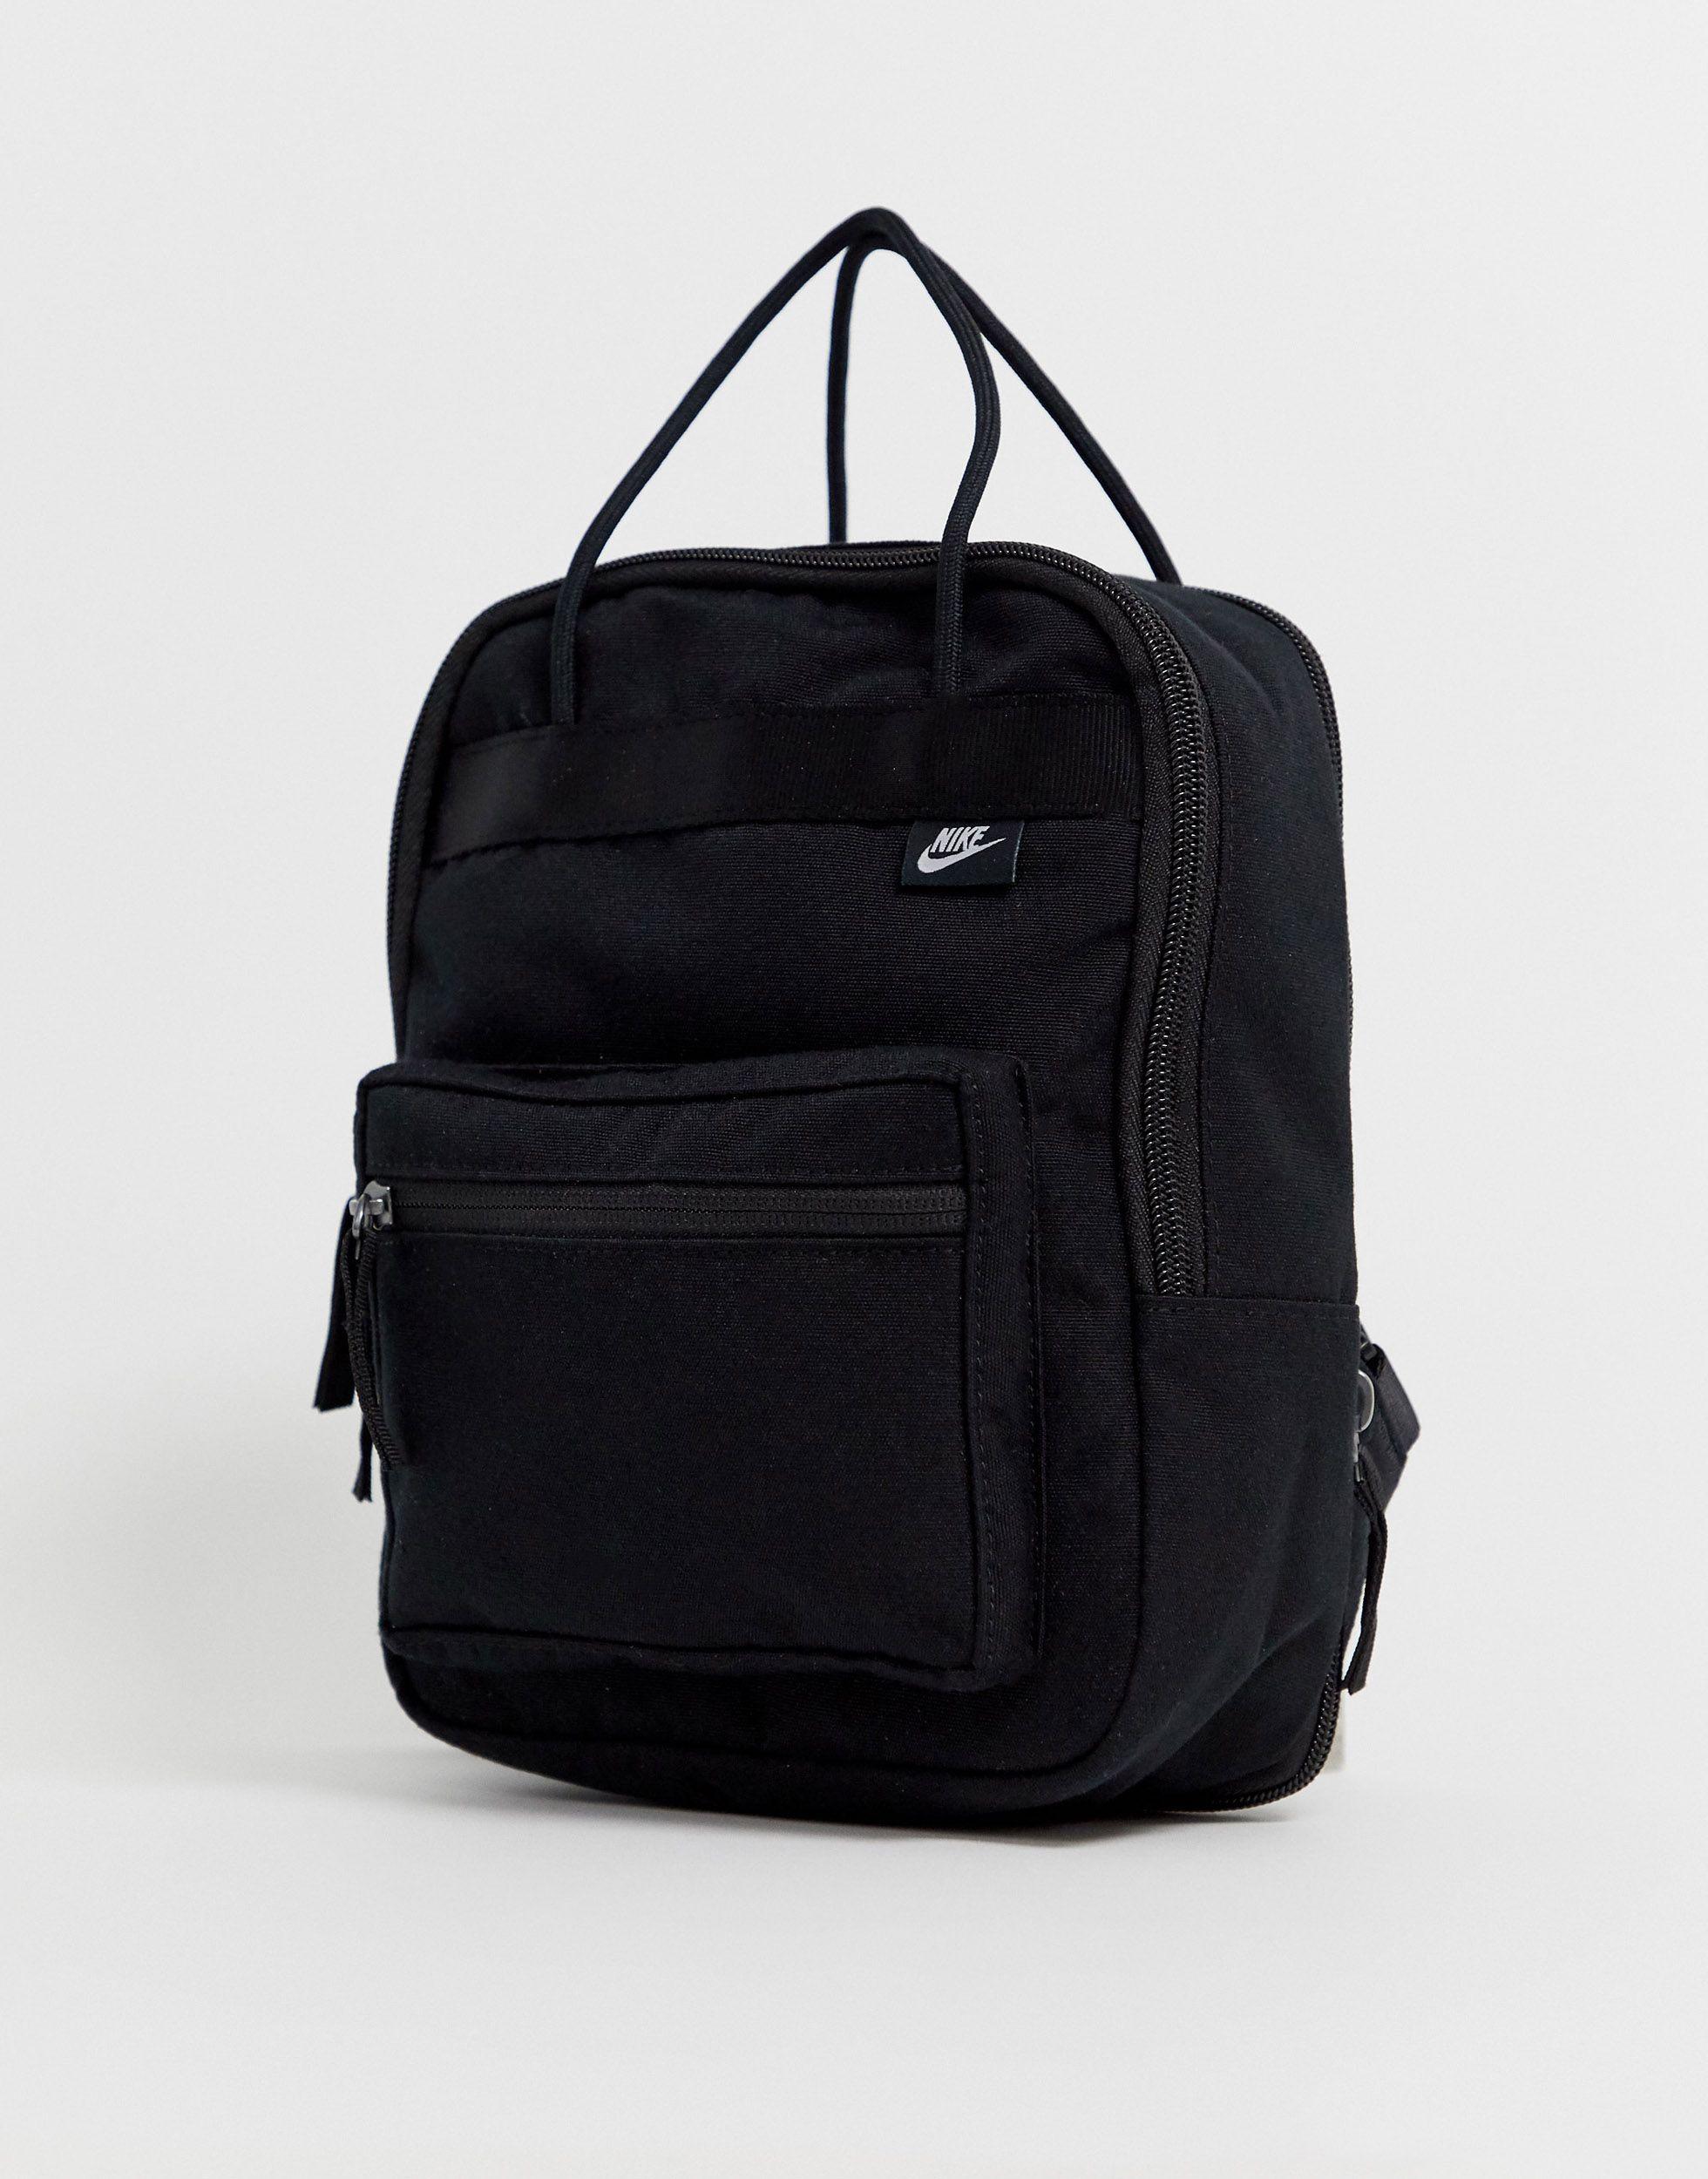 Nike Canvas Boxy Mini Backpack in Black - Lyst